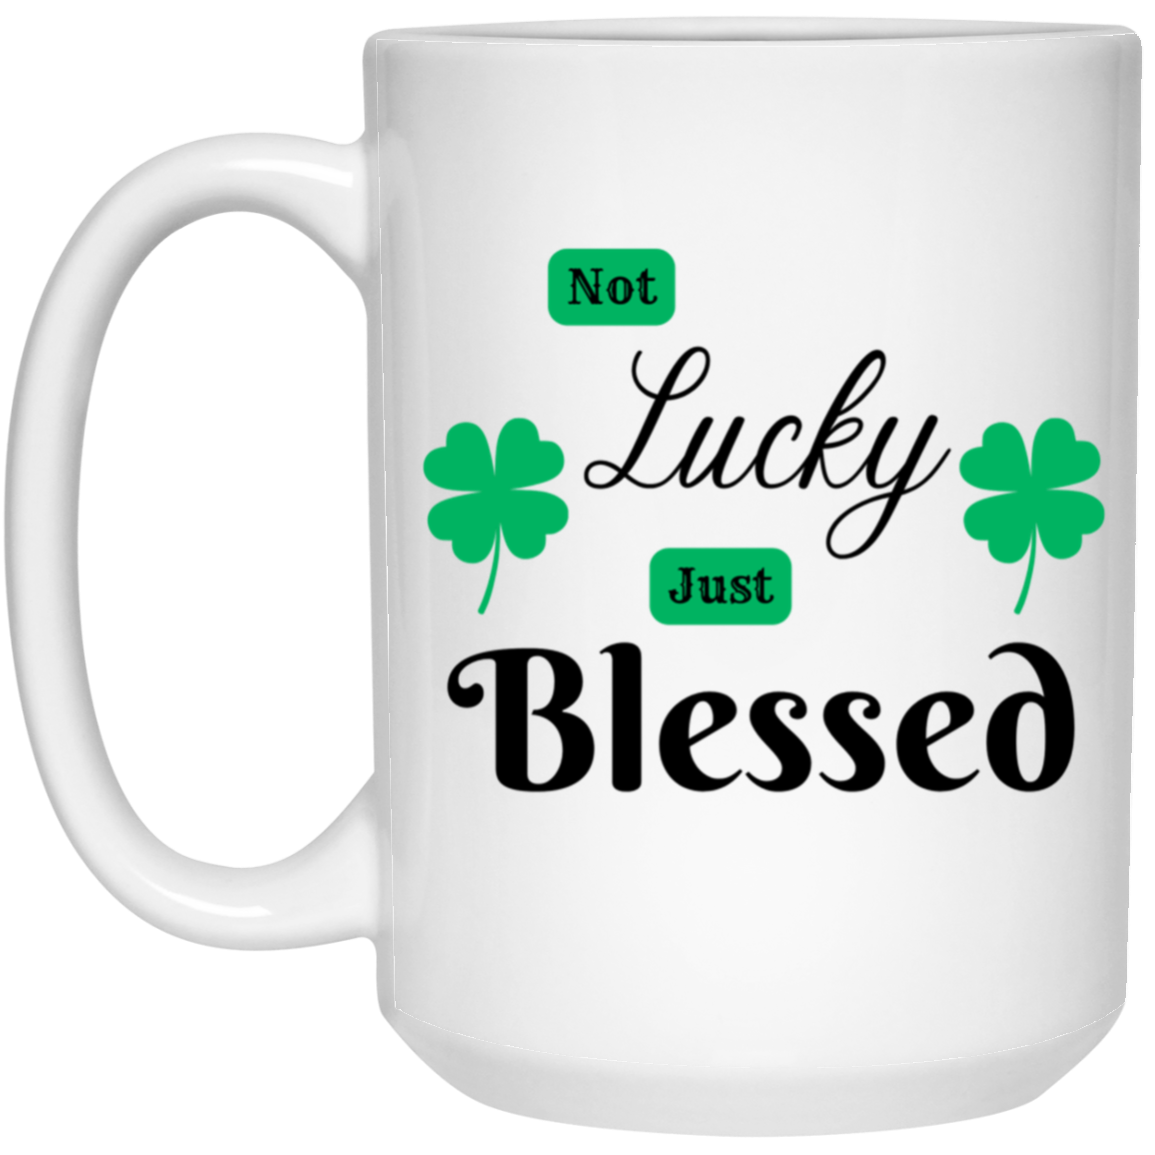 Not Lucky Just Blessed 15 oz. White Mug